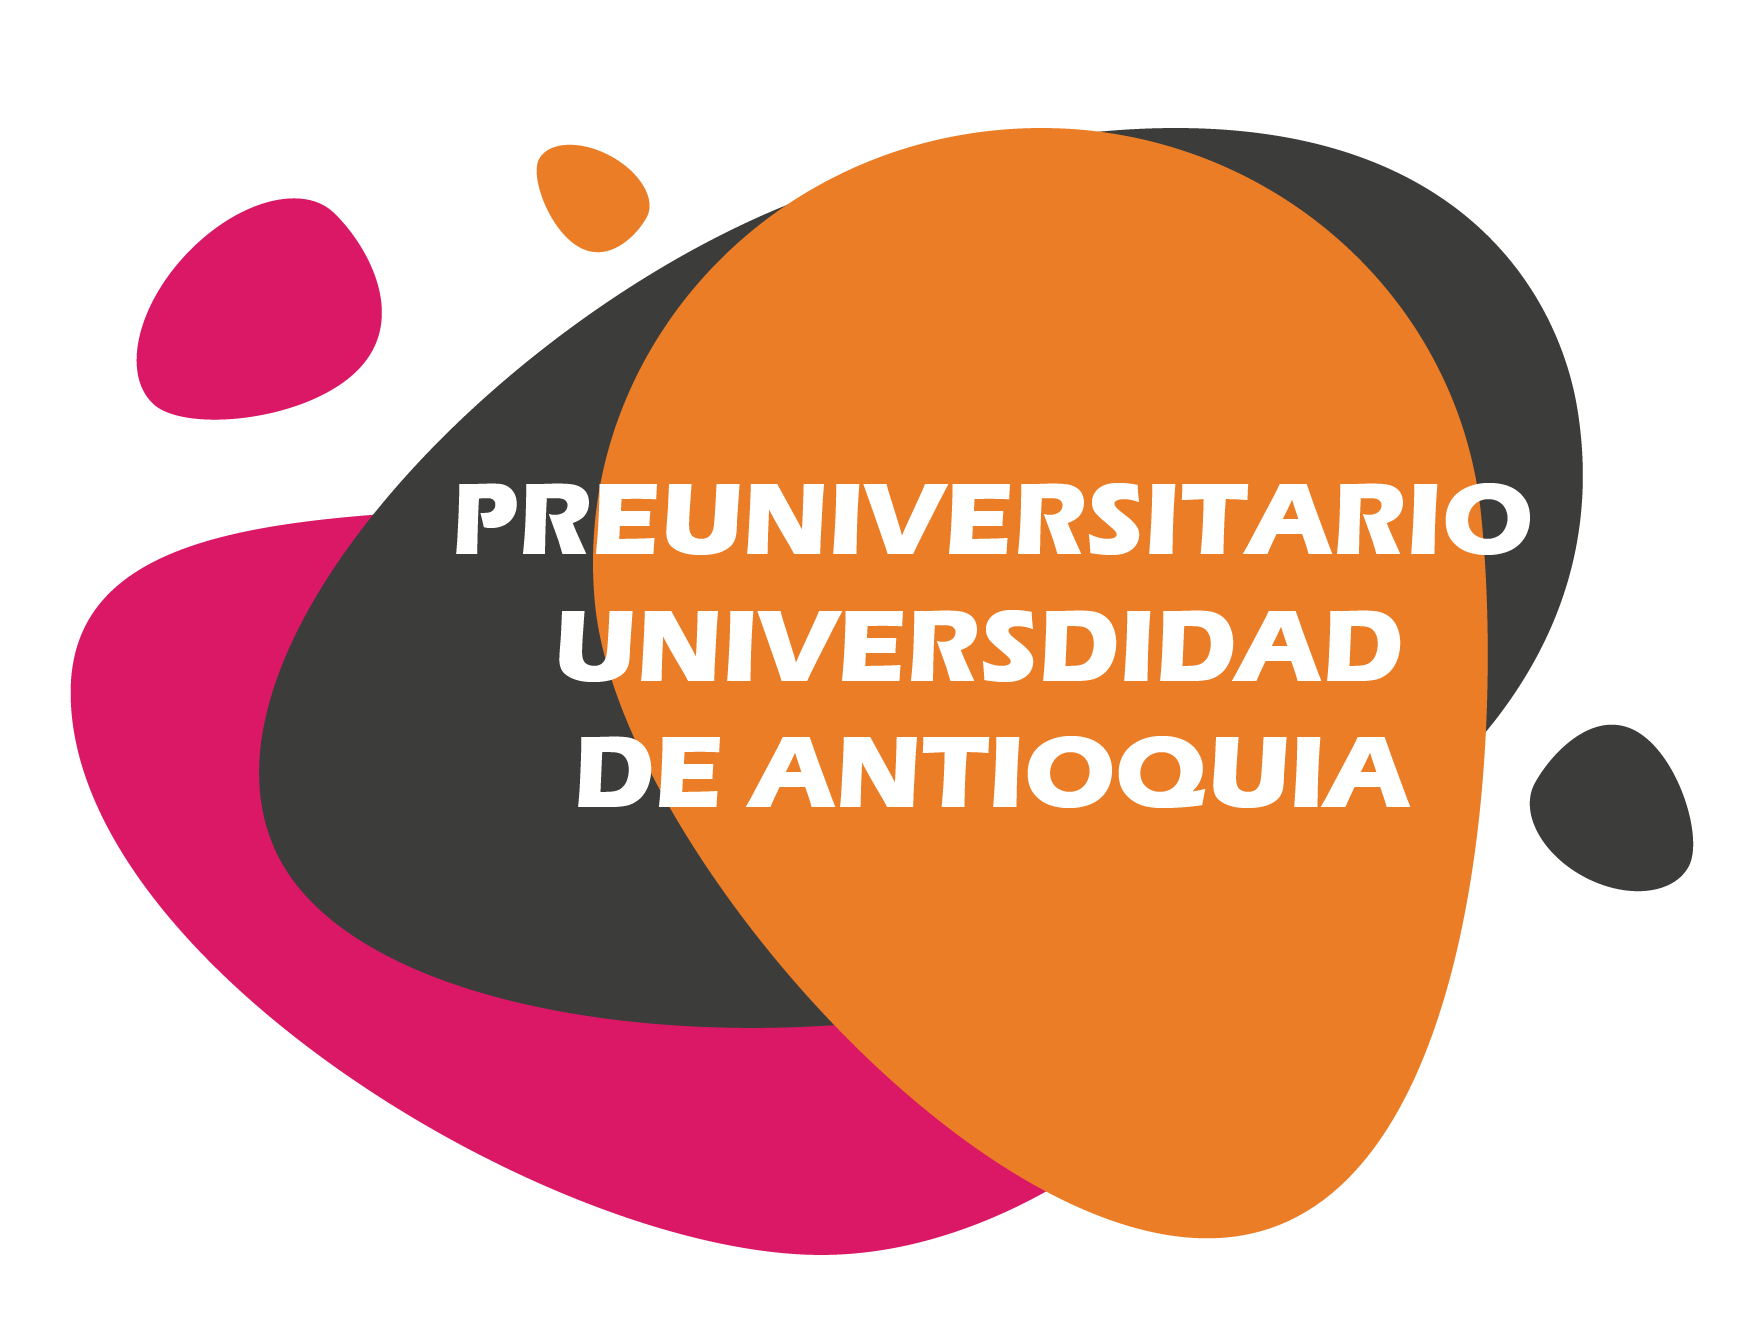 PREUNIVERSITARIO UNIVERSIDAD DE ANTIOQUIA